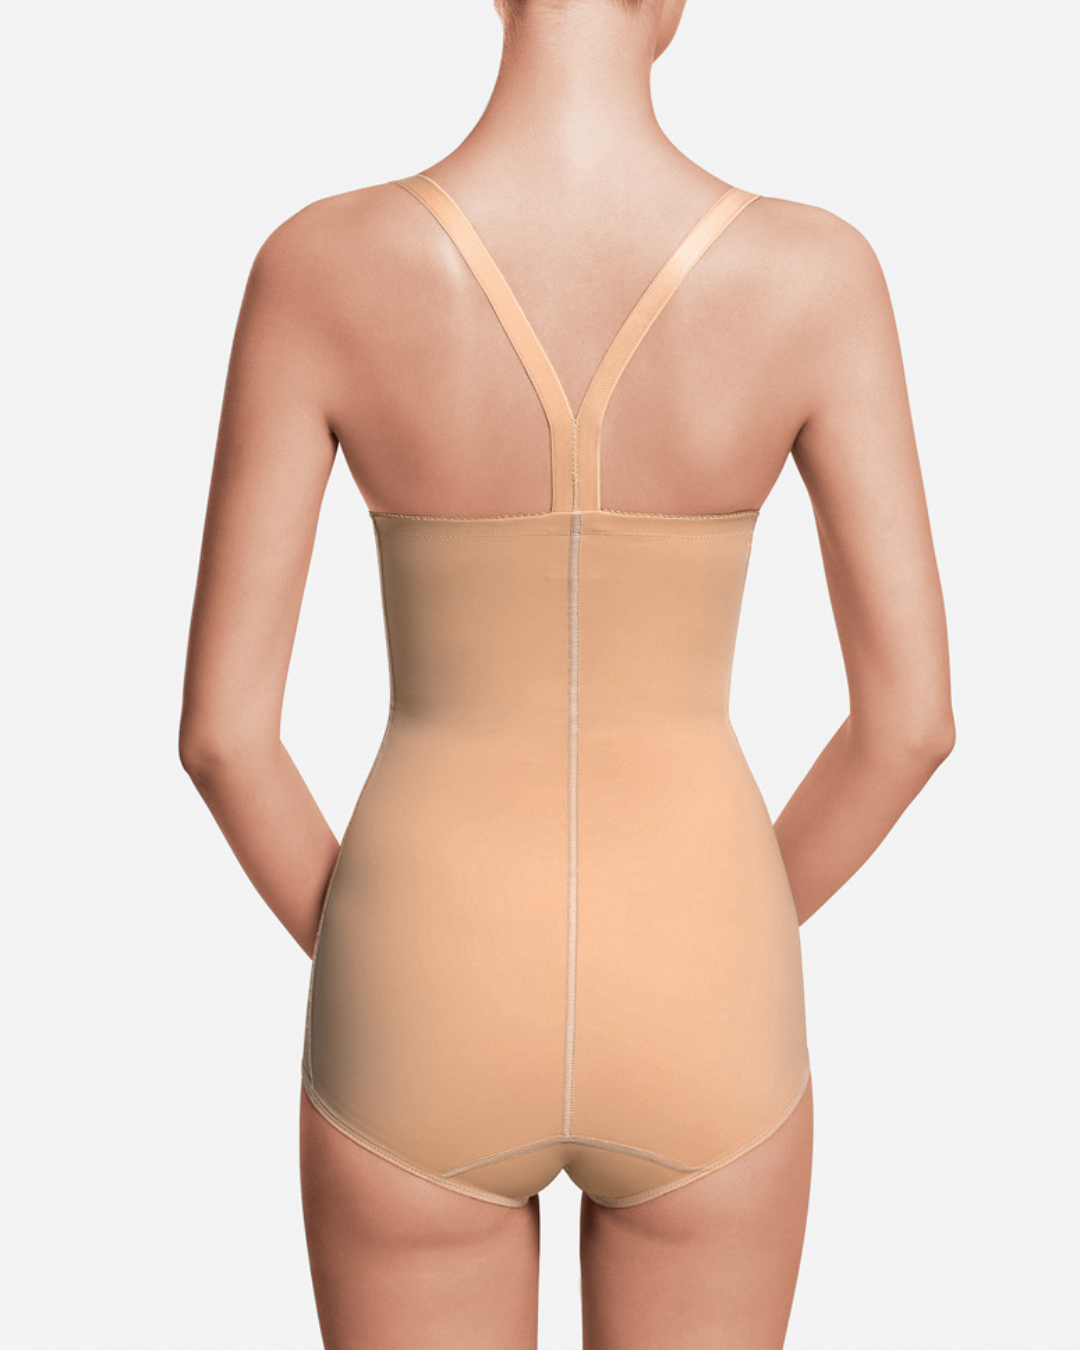 liposuction garments for abdomen and back - RECOVA®